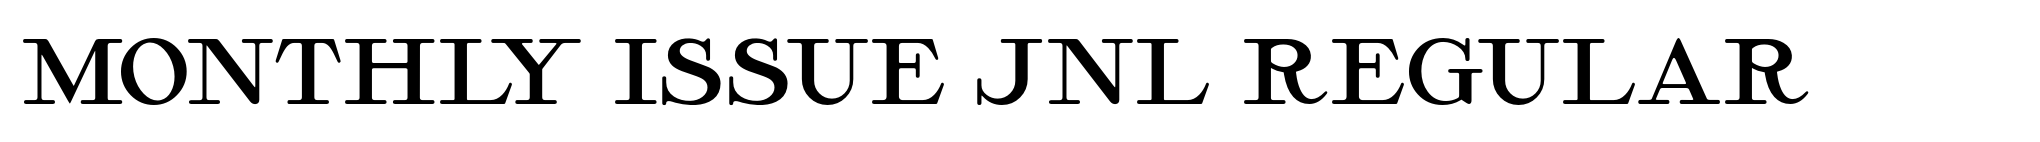 Monthly Issue JNL Regular image